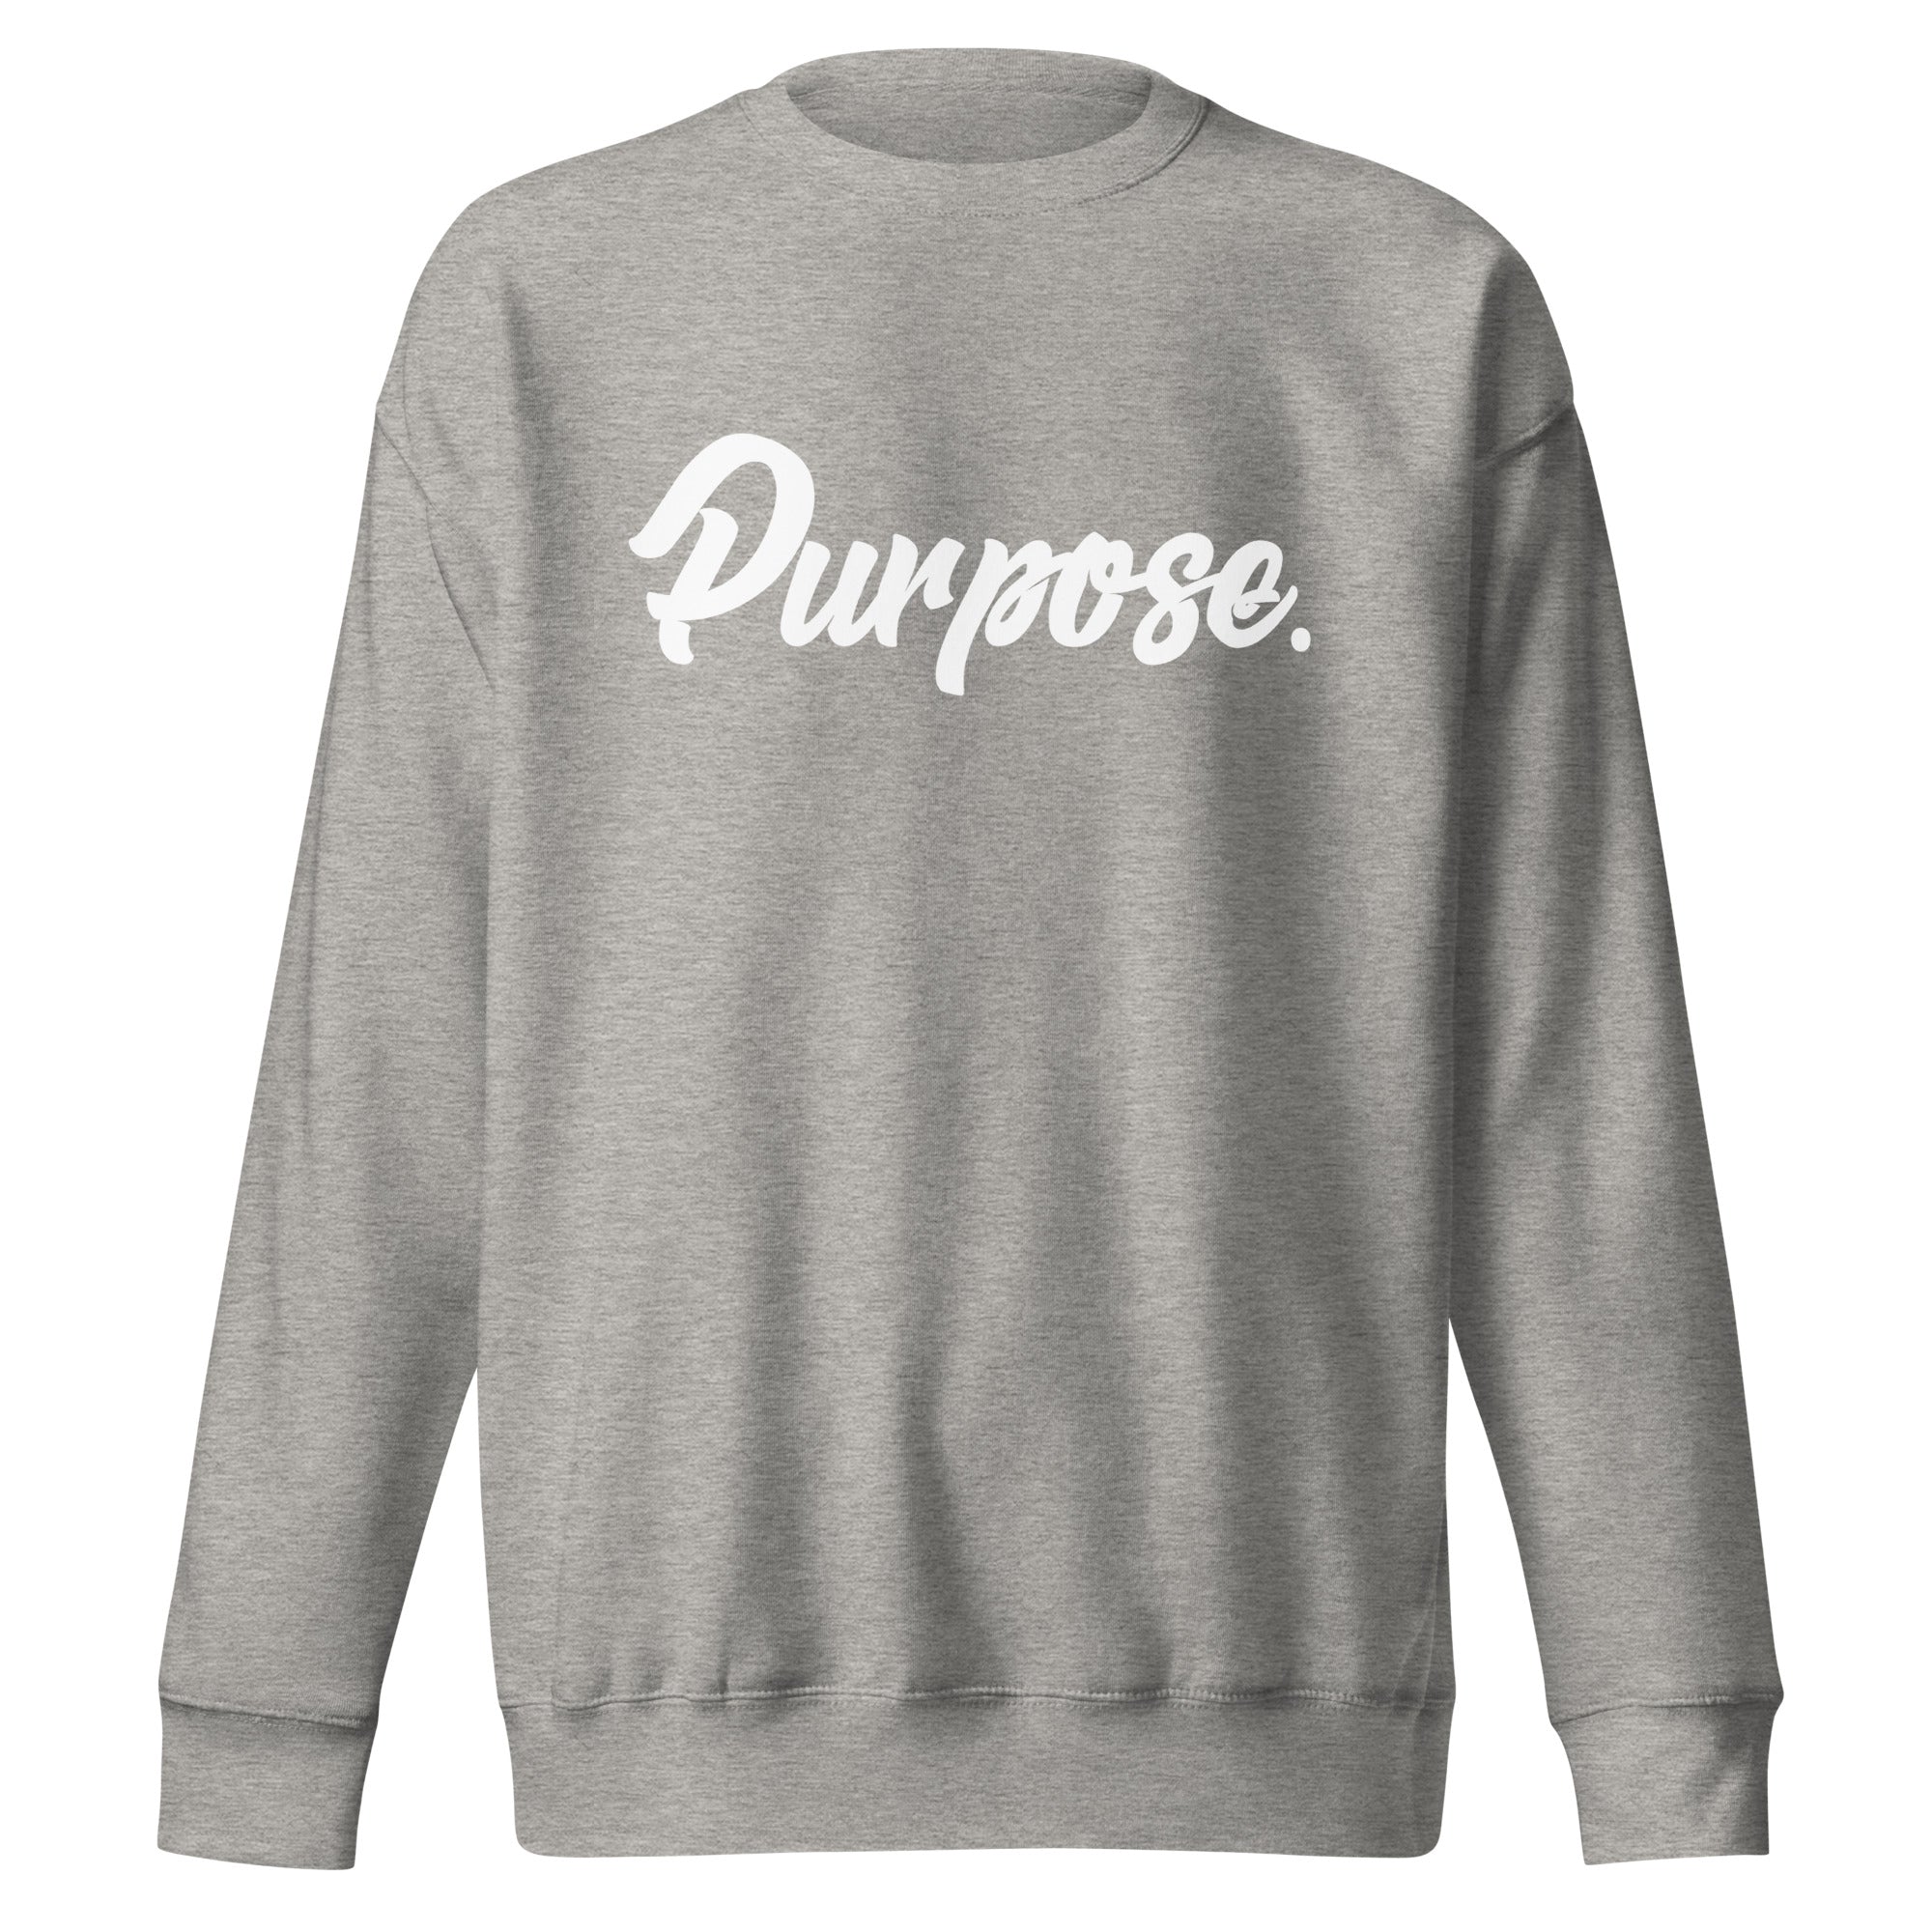 Purpose.  Premium Sweatshirt